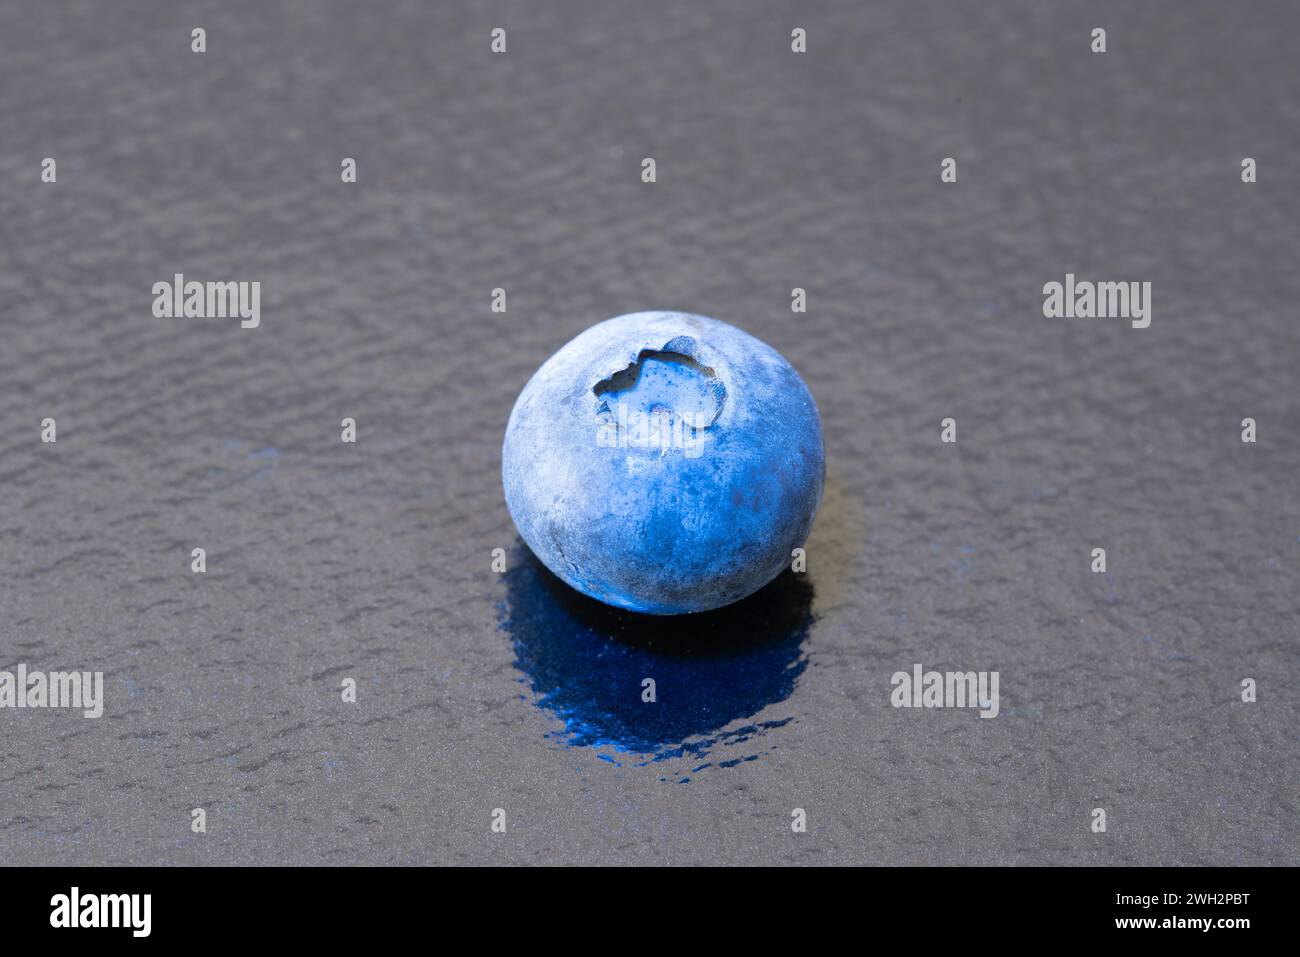 Close up of single blueberry on a black reflective background. Stock Photo